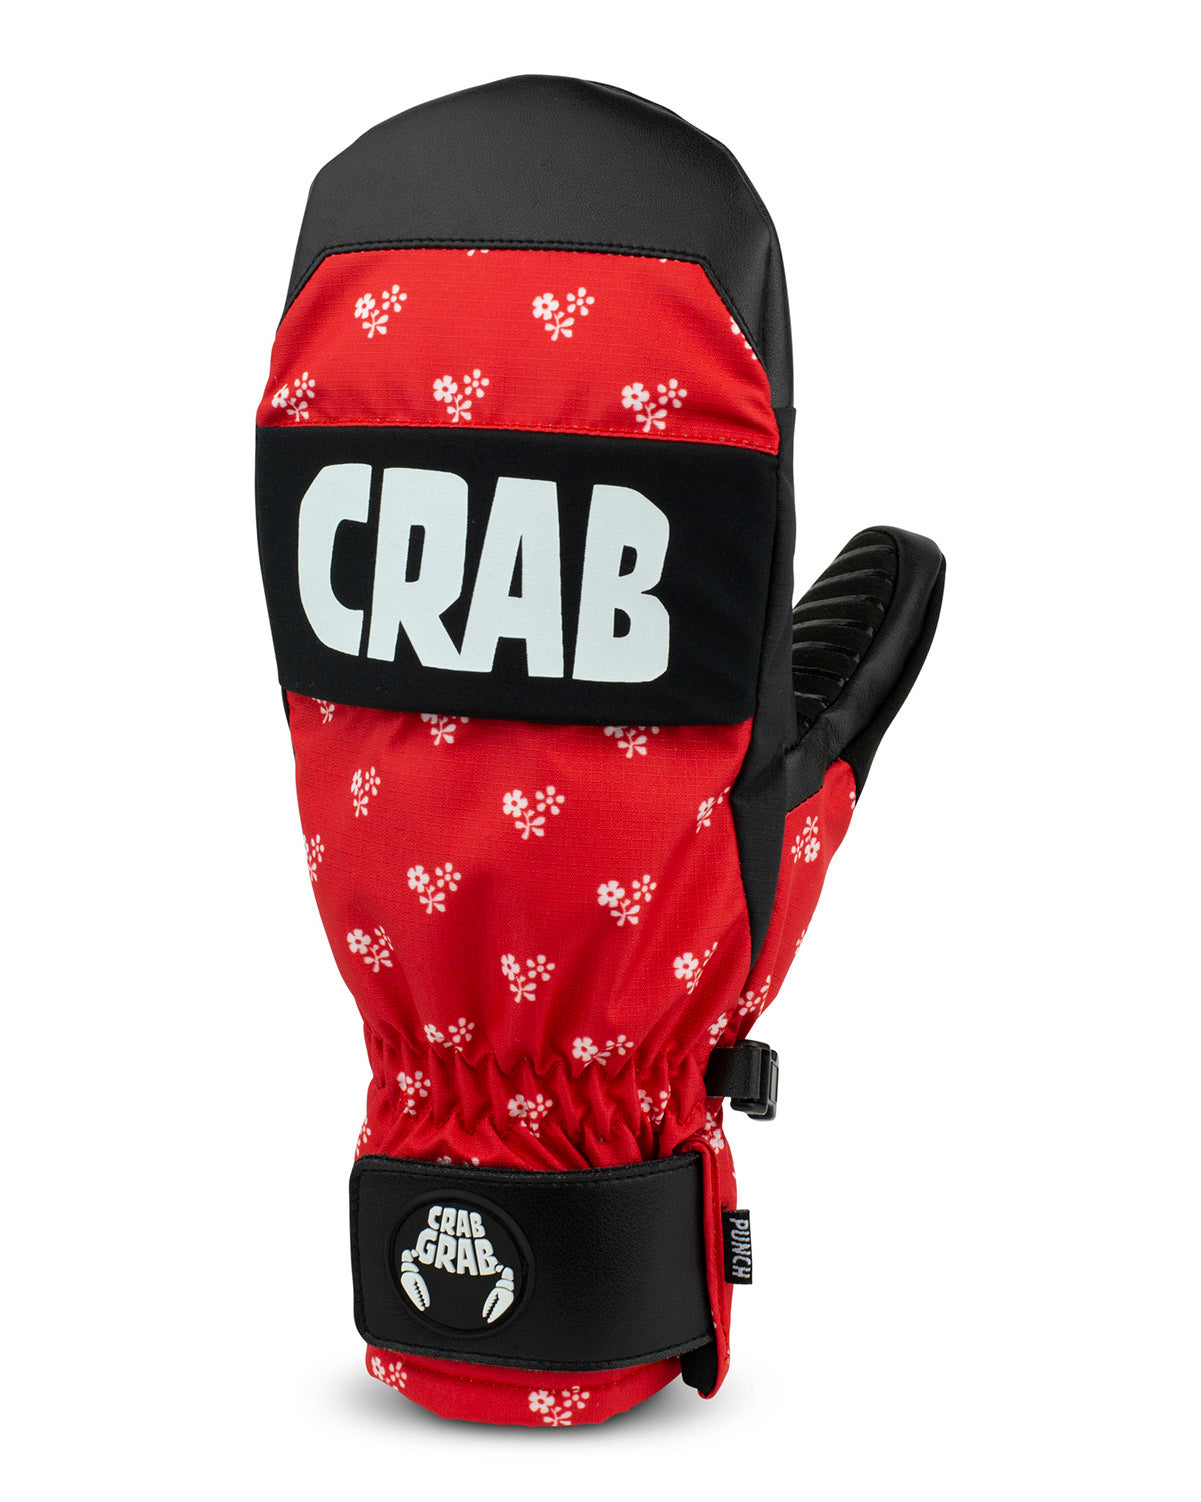 Punch Mitt - Crab Grab